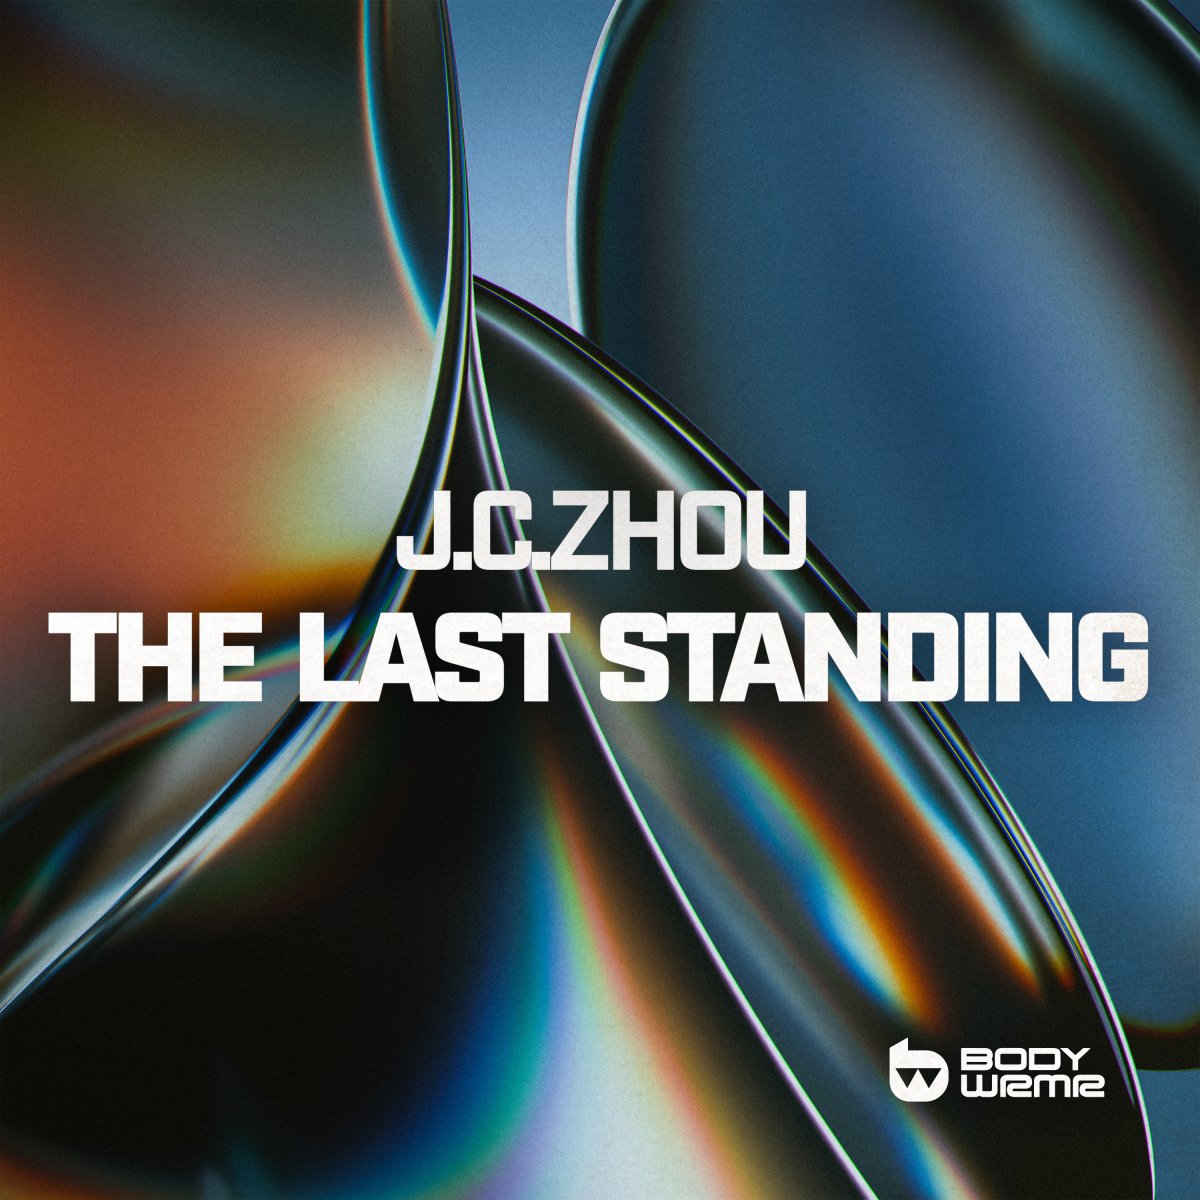 The Last Standing - J.C.Zhou⁠ 